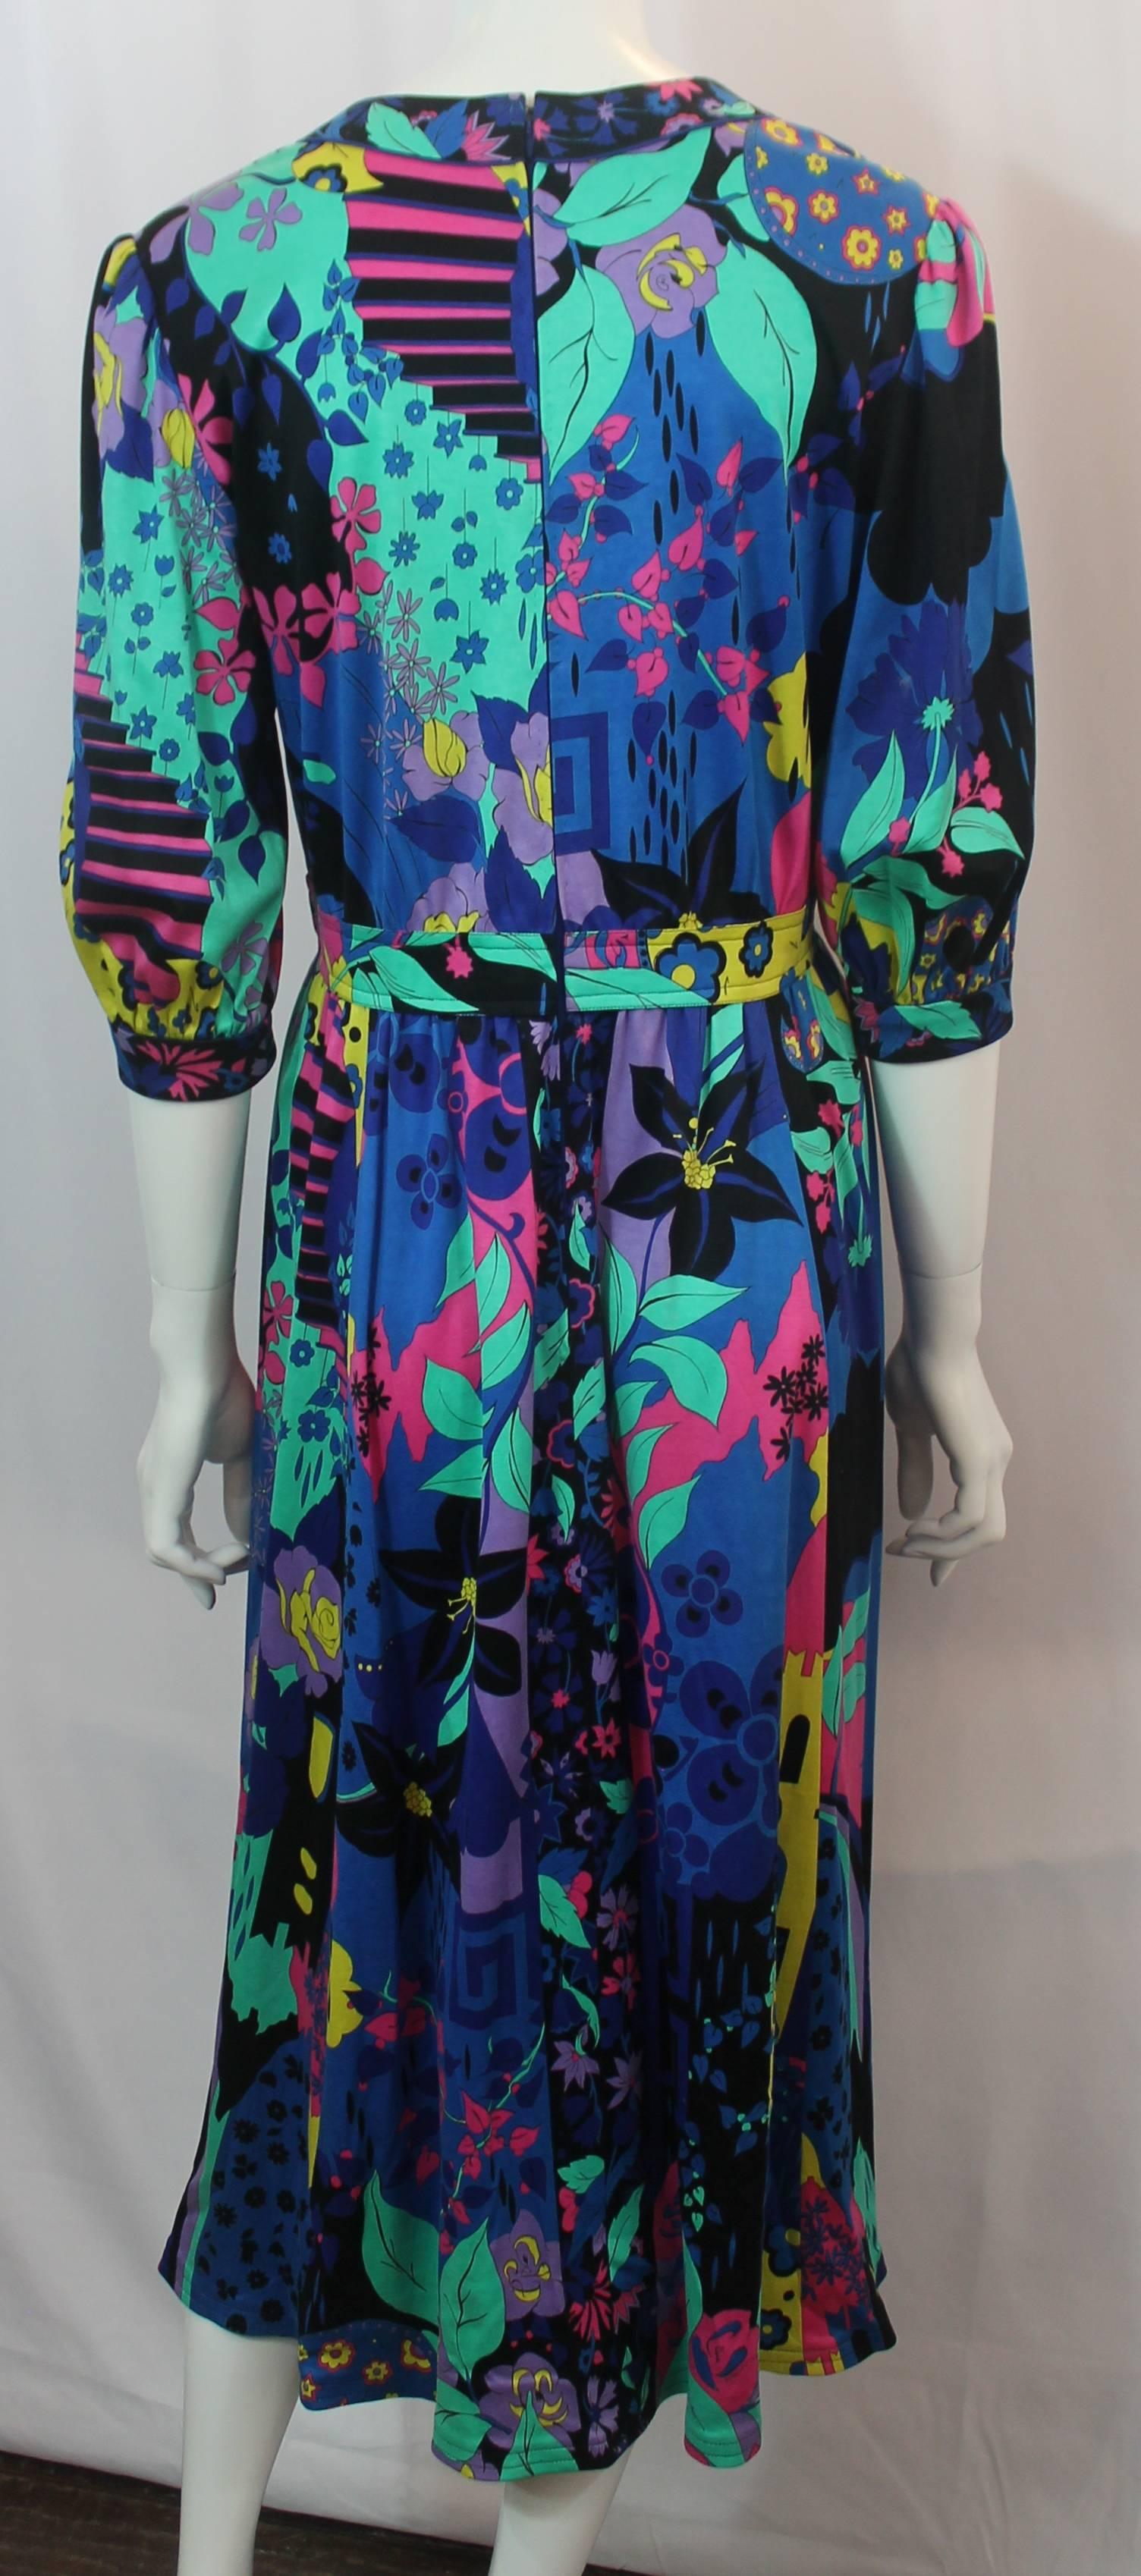 Black Averardo Bessi Vintage Multi-Colored Floral Dress - 12 - circa 1960's-1970's